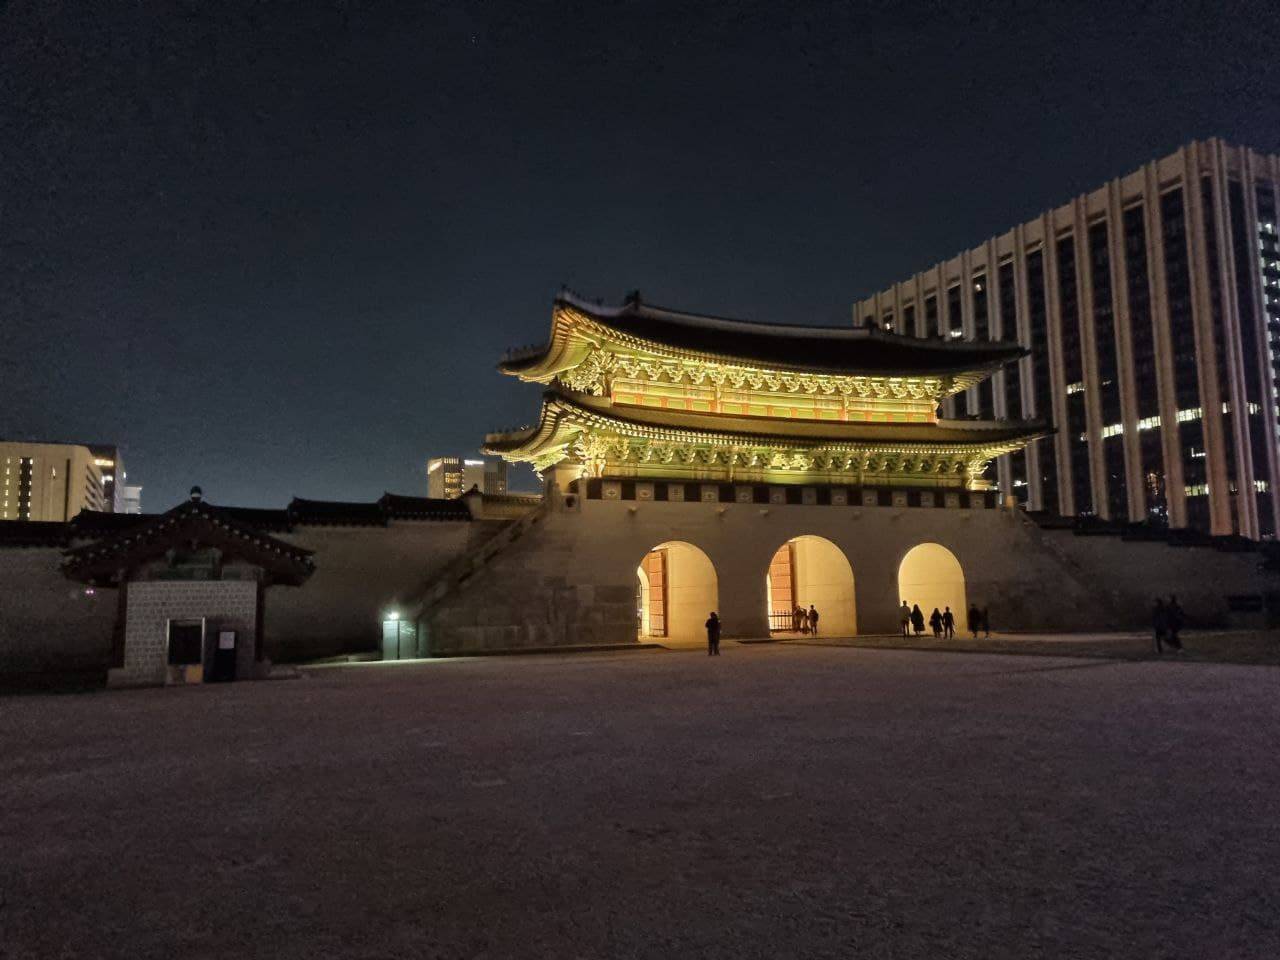 [My Favorite Travel Destination] Night Royal Palace